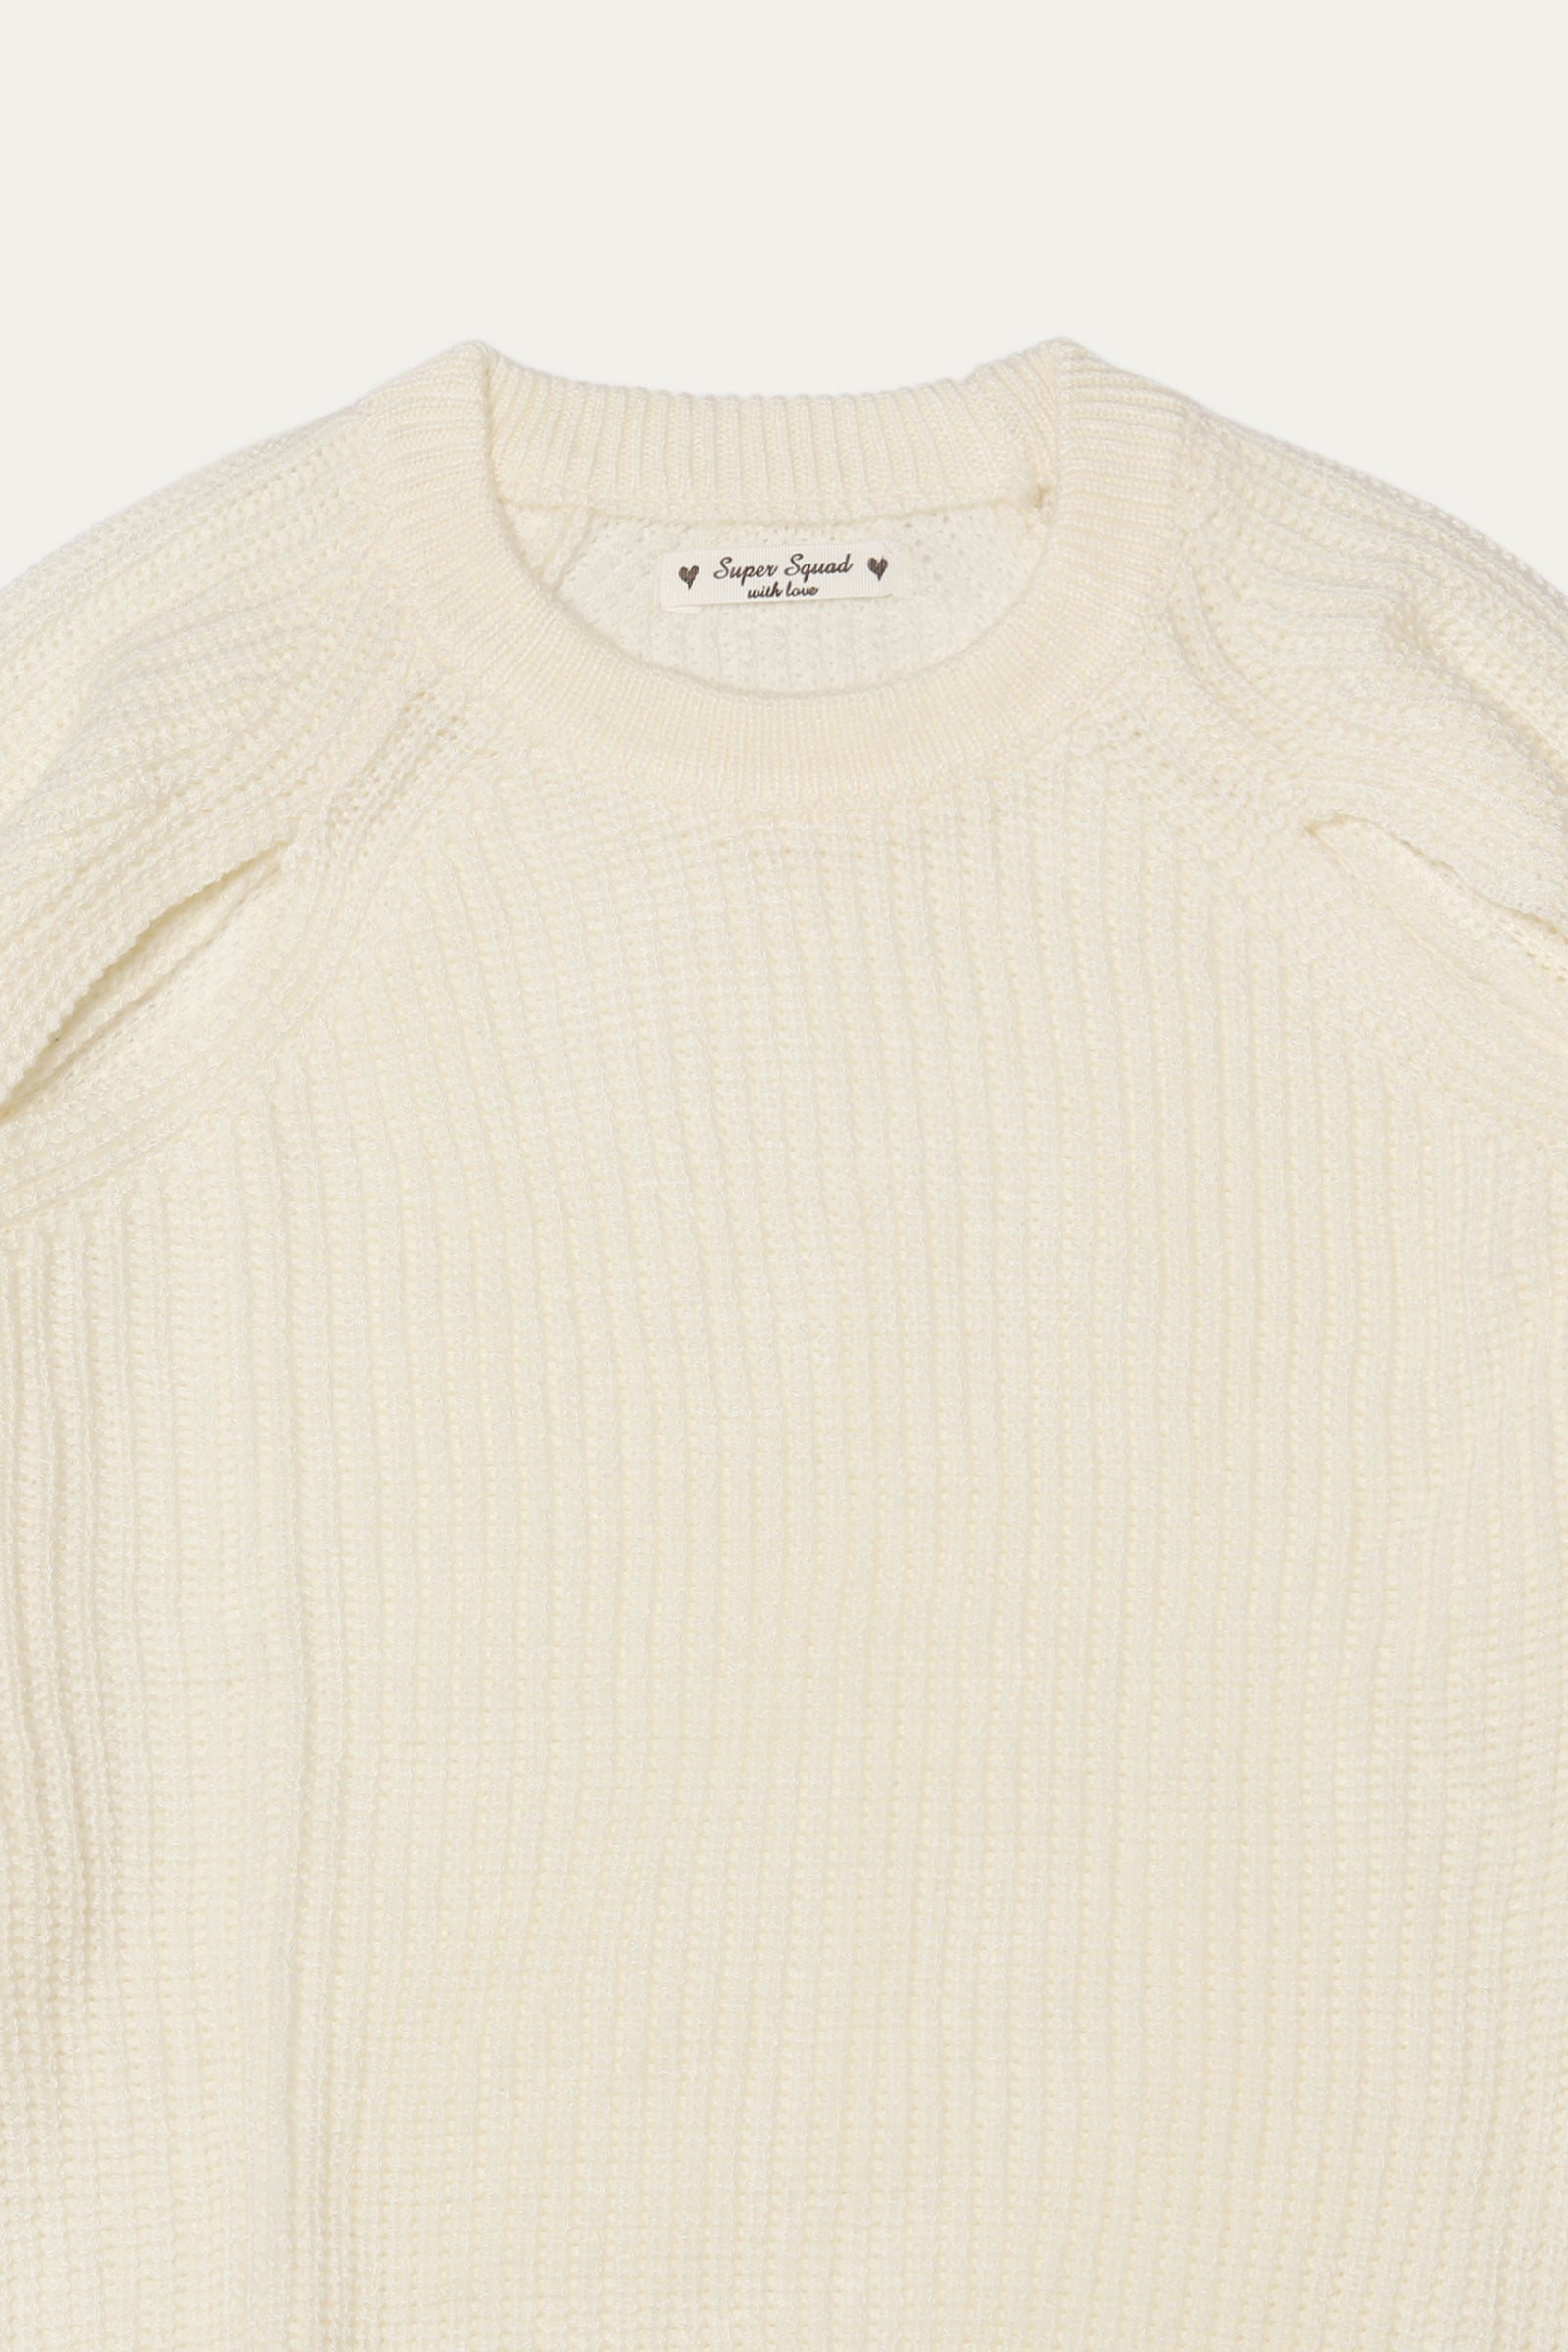 Sweater (SSGSTR-93)